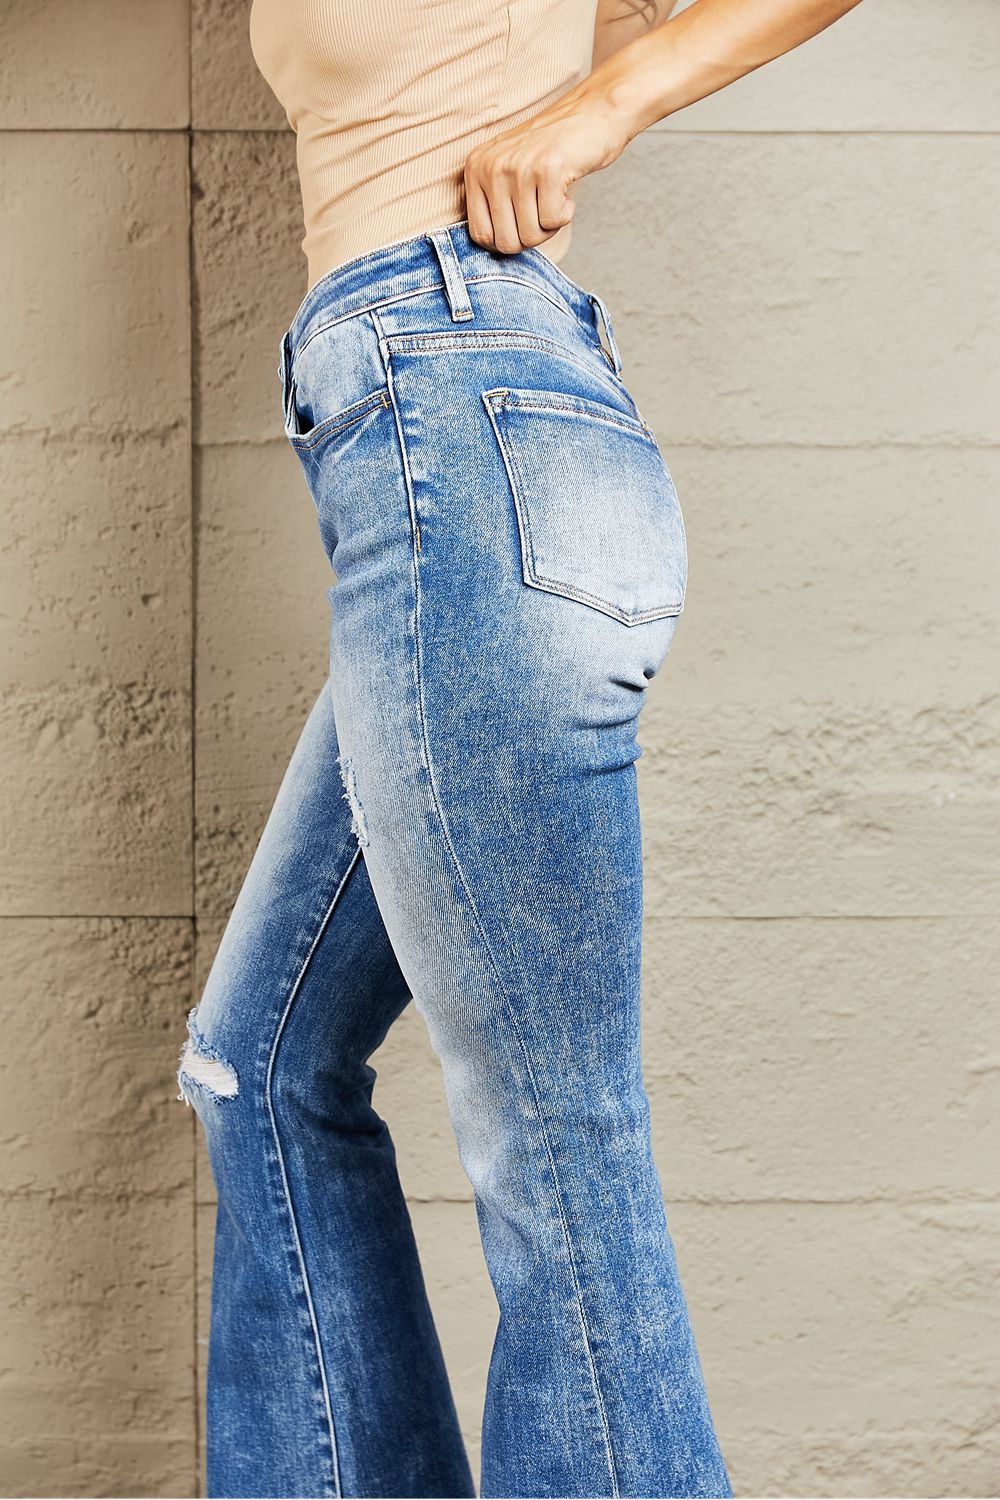 BAYEAS Izzie Mid Rise Bootcut Jeans - Alonna's Legging Land